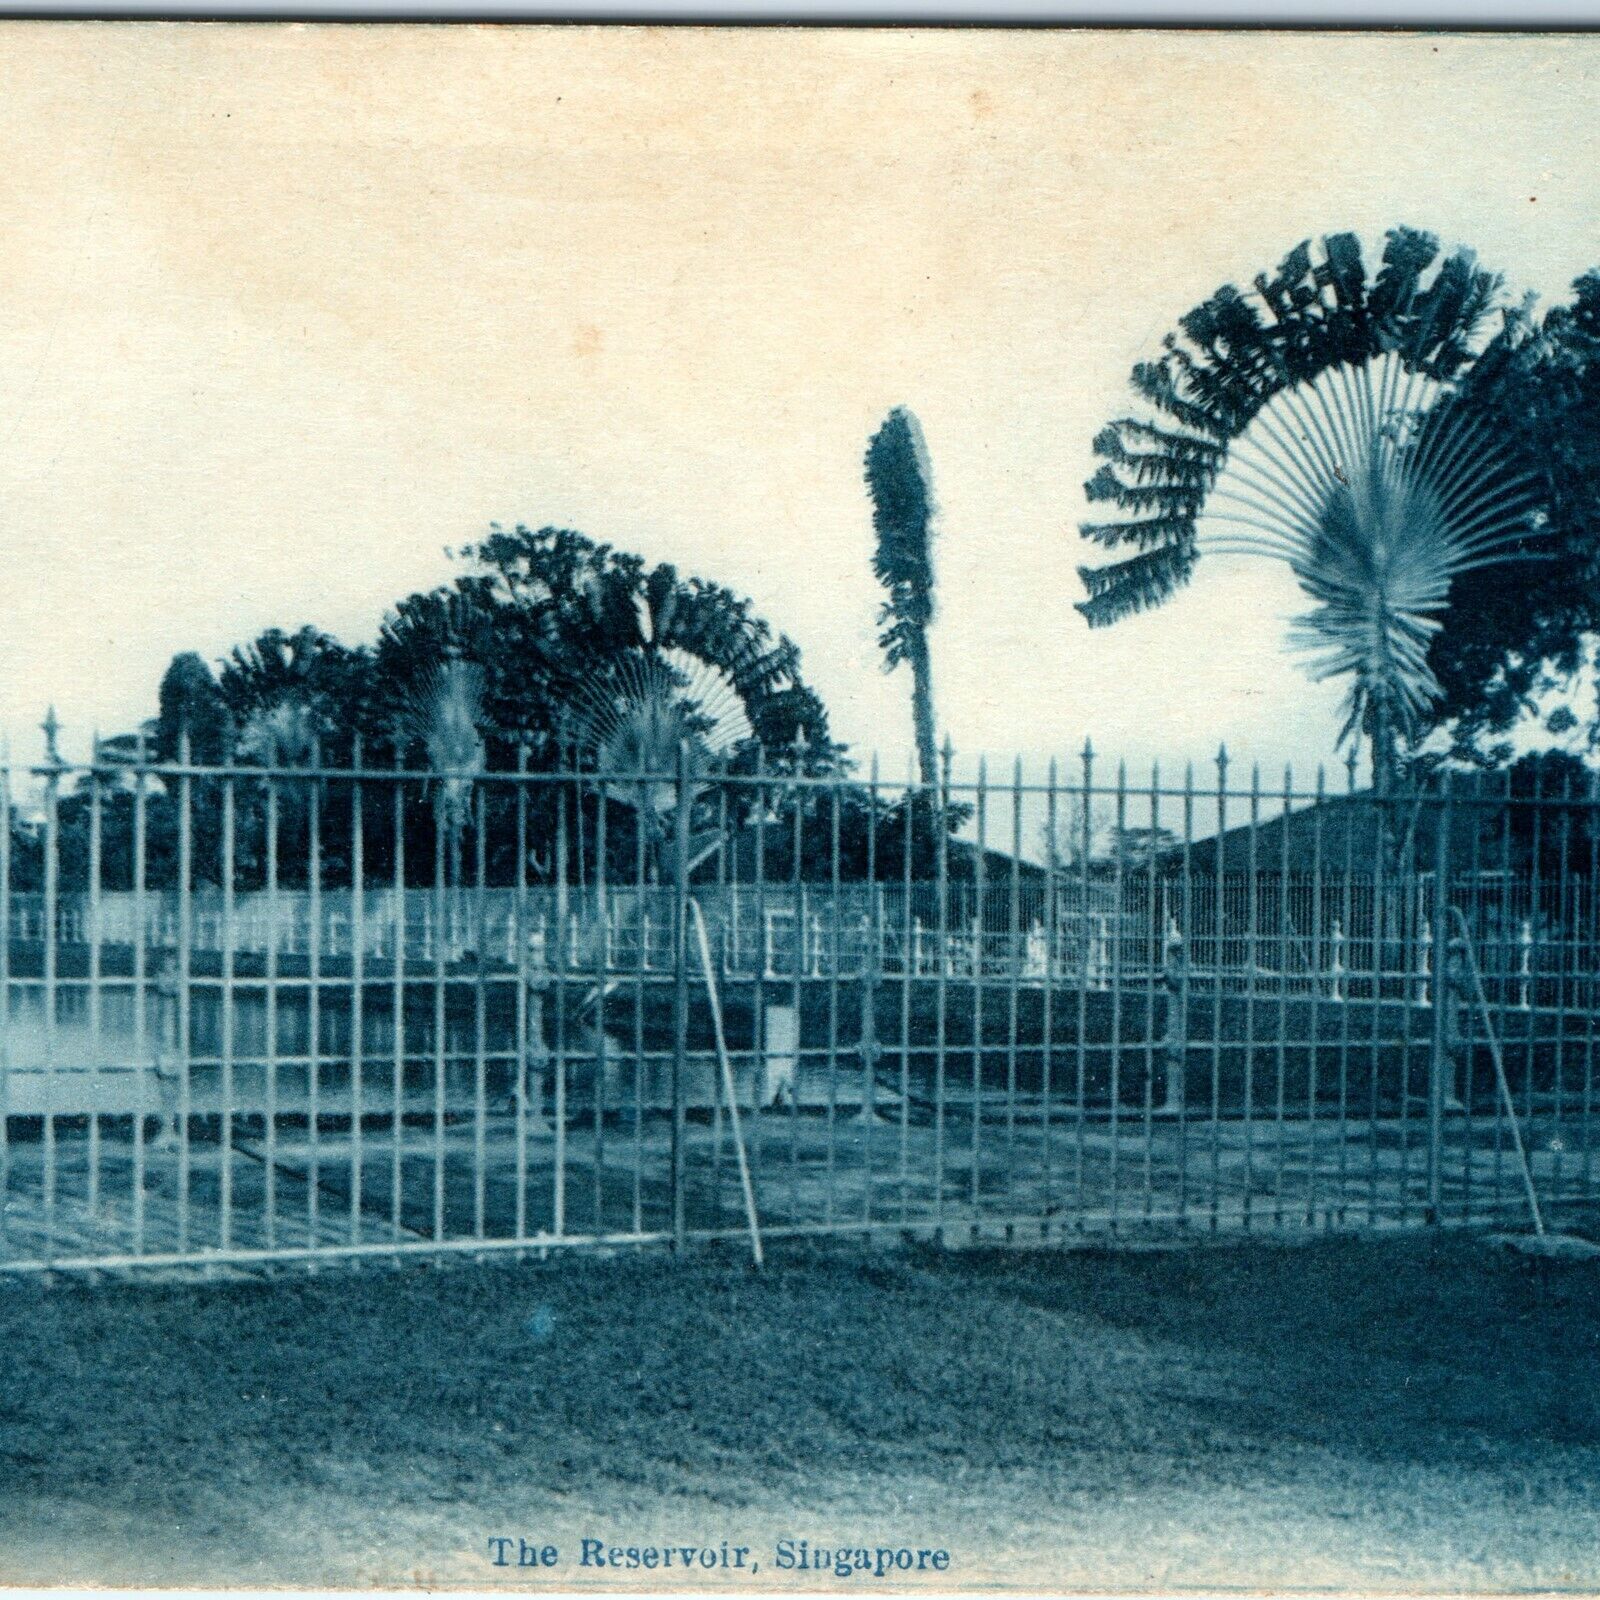 c1910s Singapore Reservoir Cyanotype Litho Photo Postcard Palm Tree Fence A51